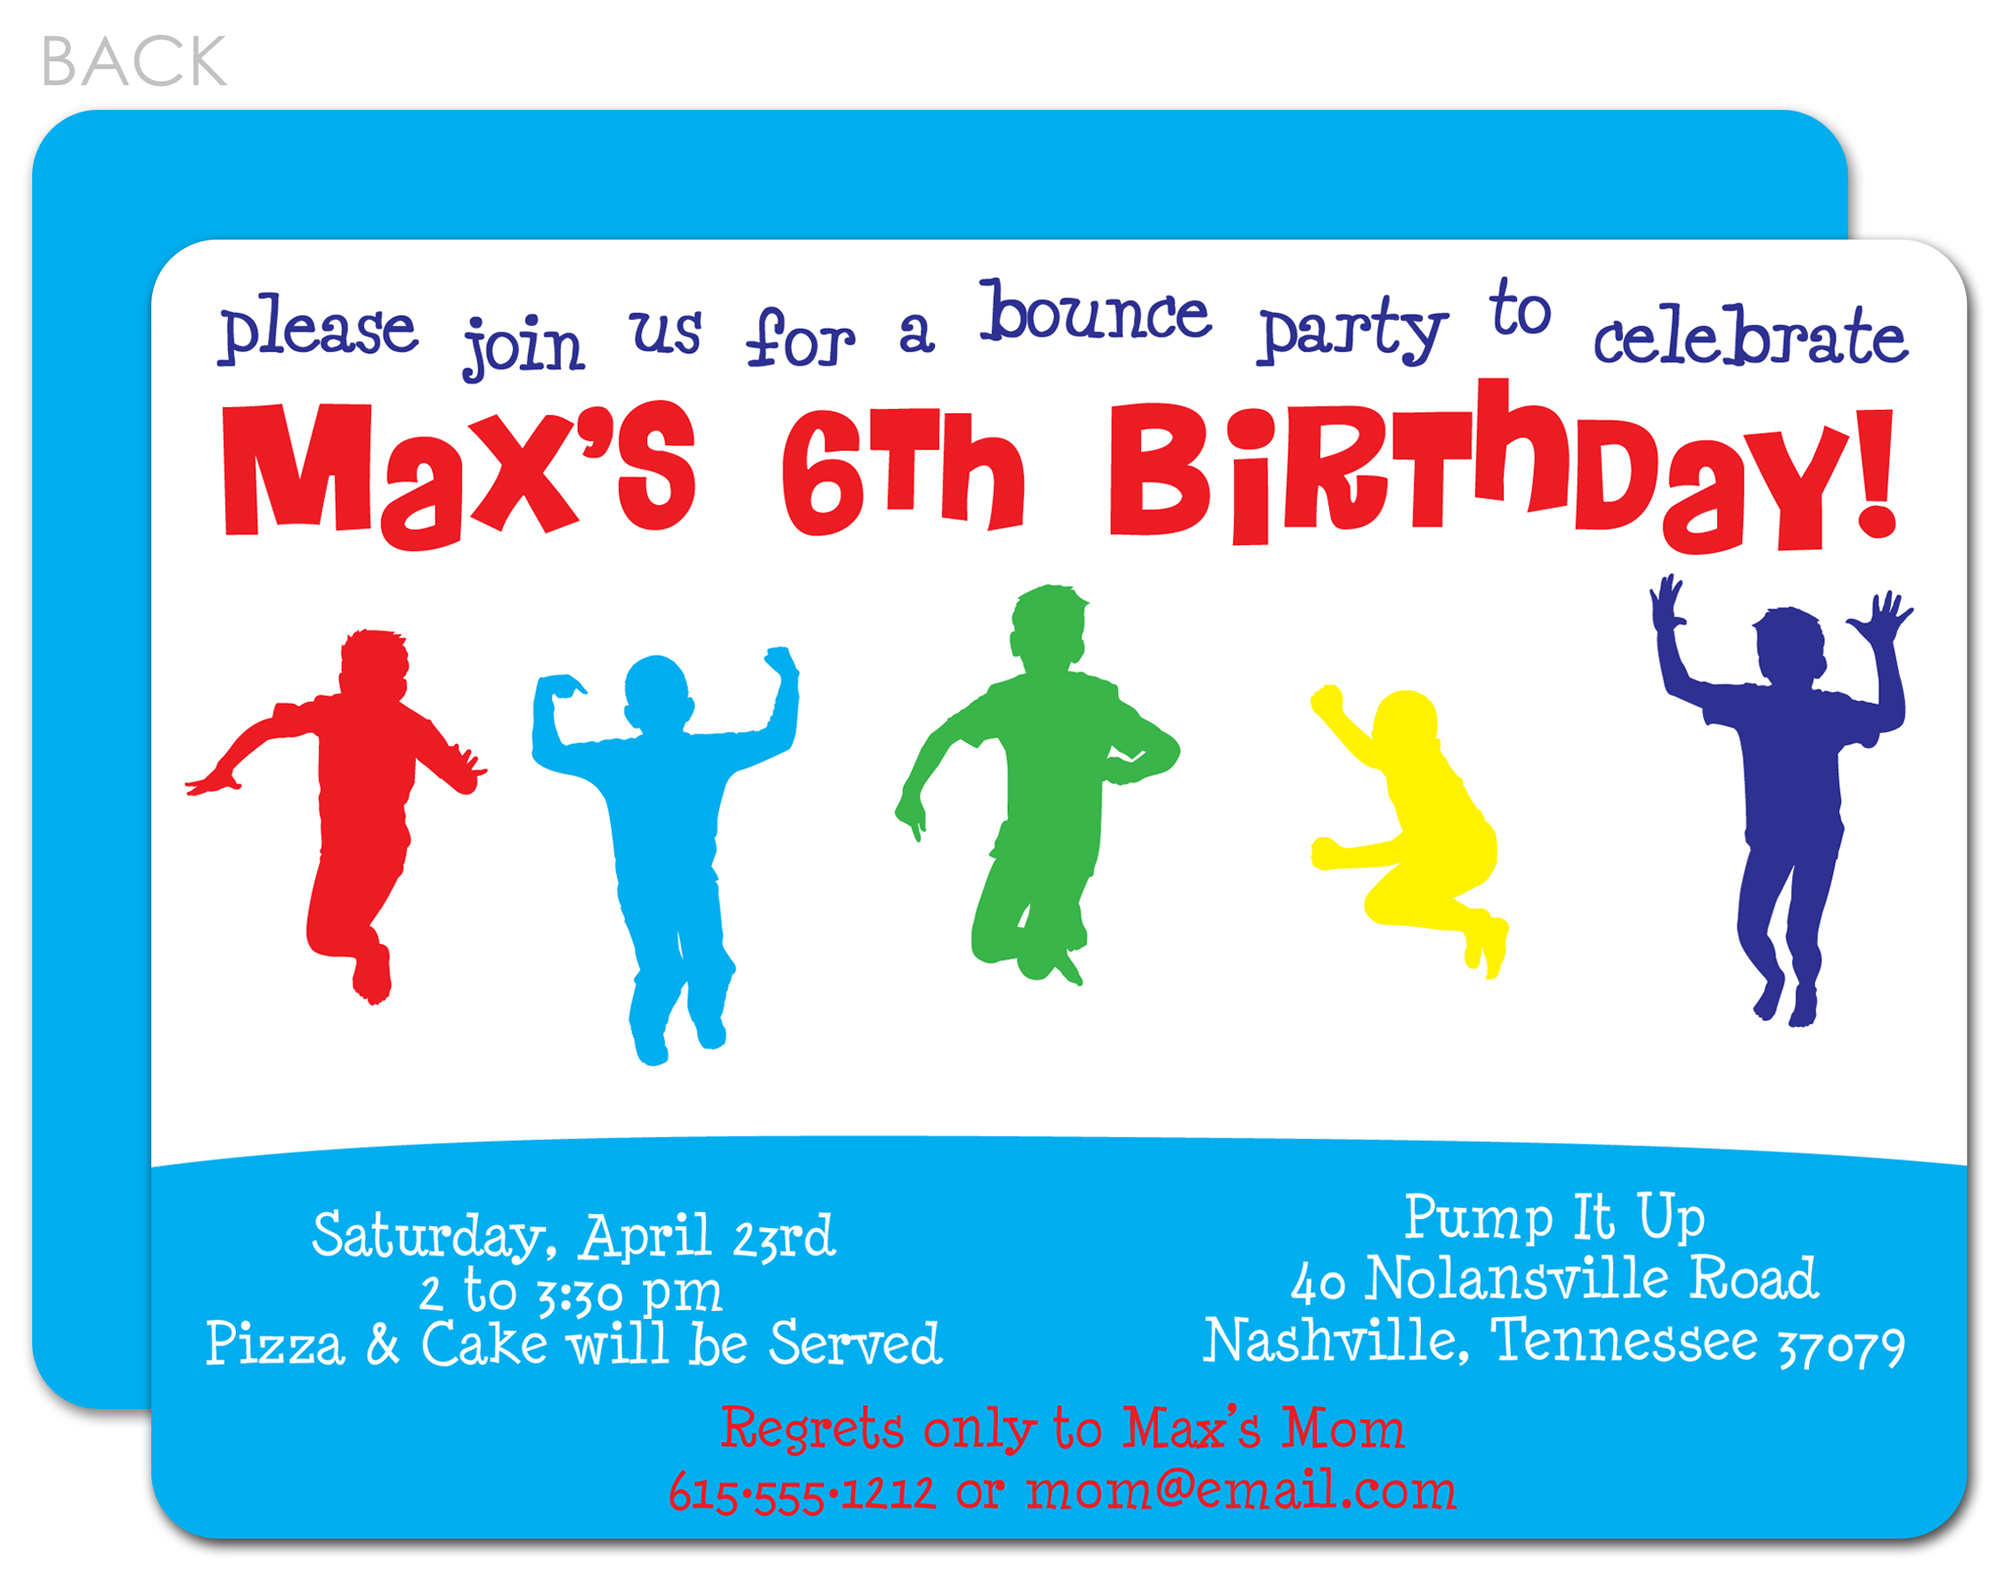 7-best-images-of-free-printable-birthday-invitations-boy-boys-birthday-party-invitations-free